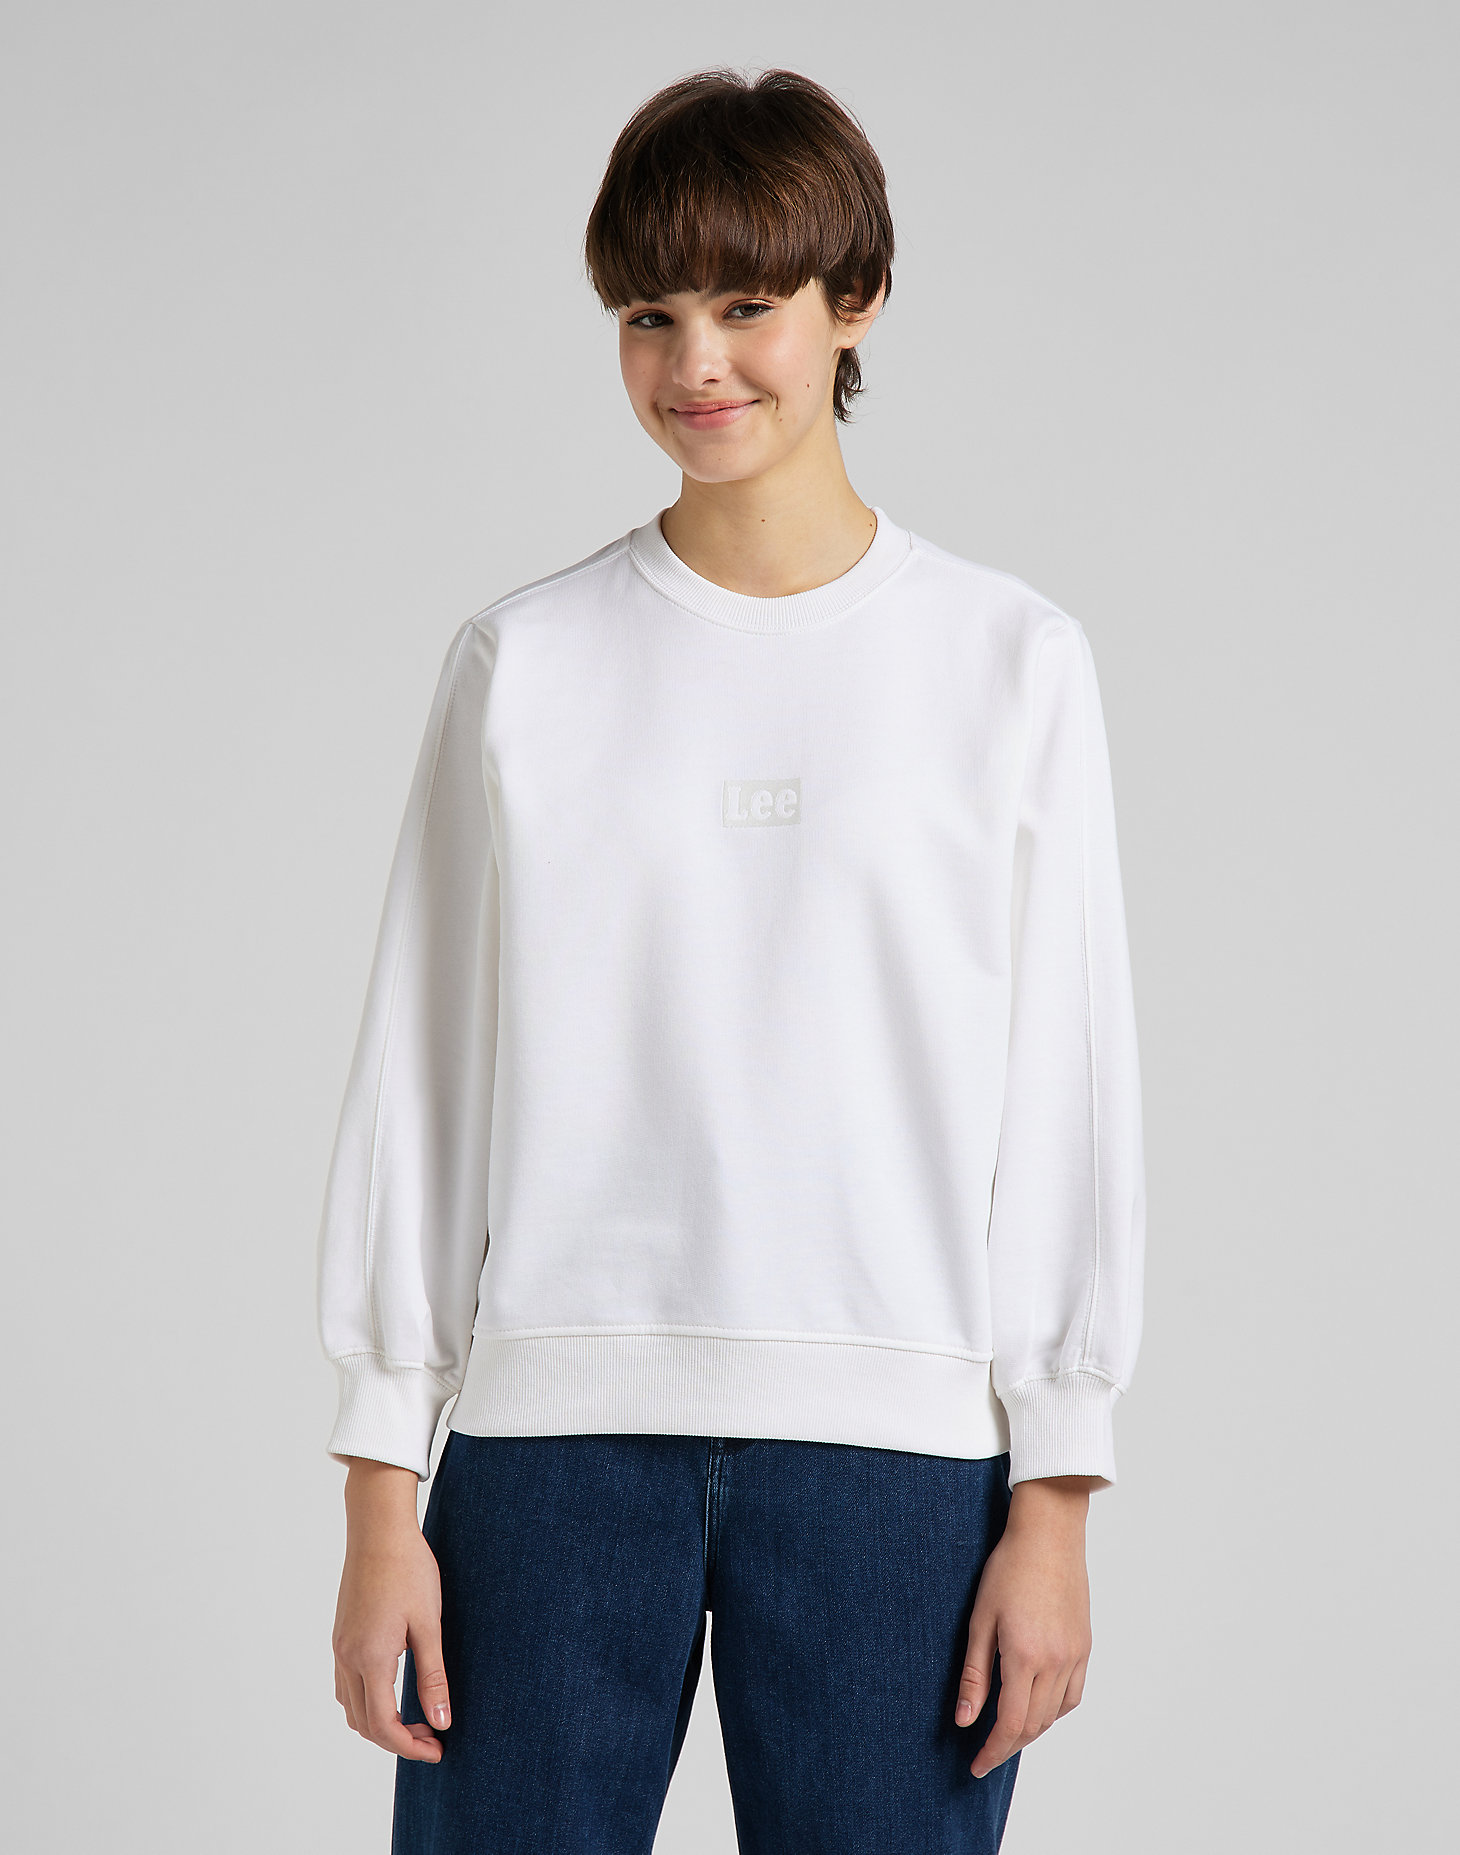 Hoodie Sweatshirt in Bright White alternative view 4